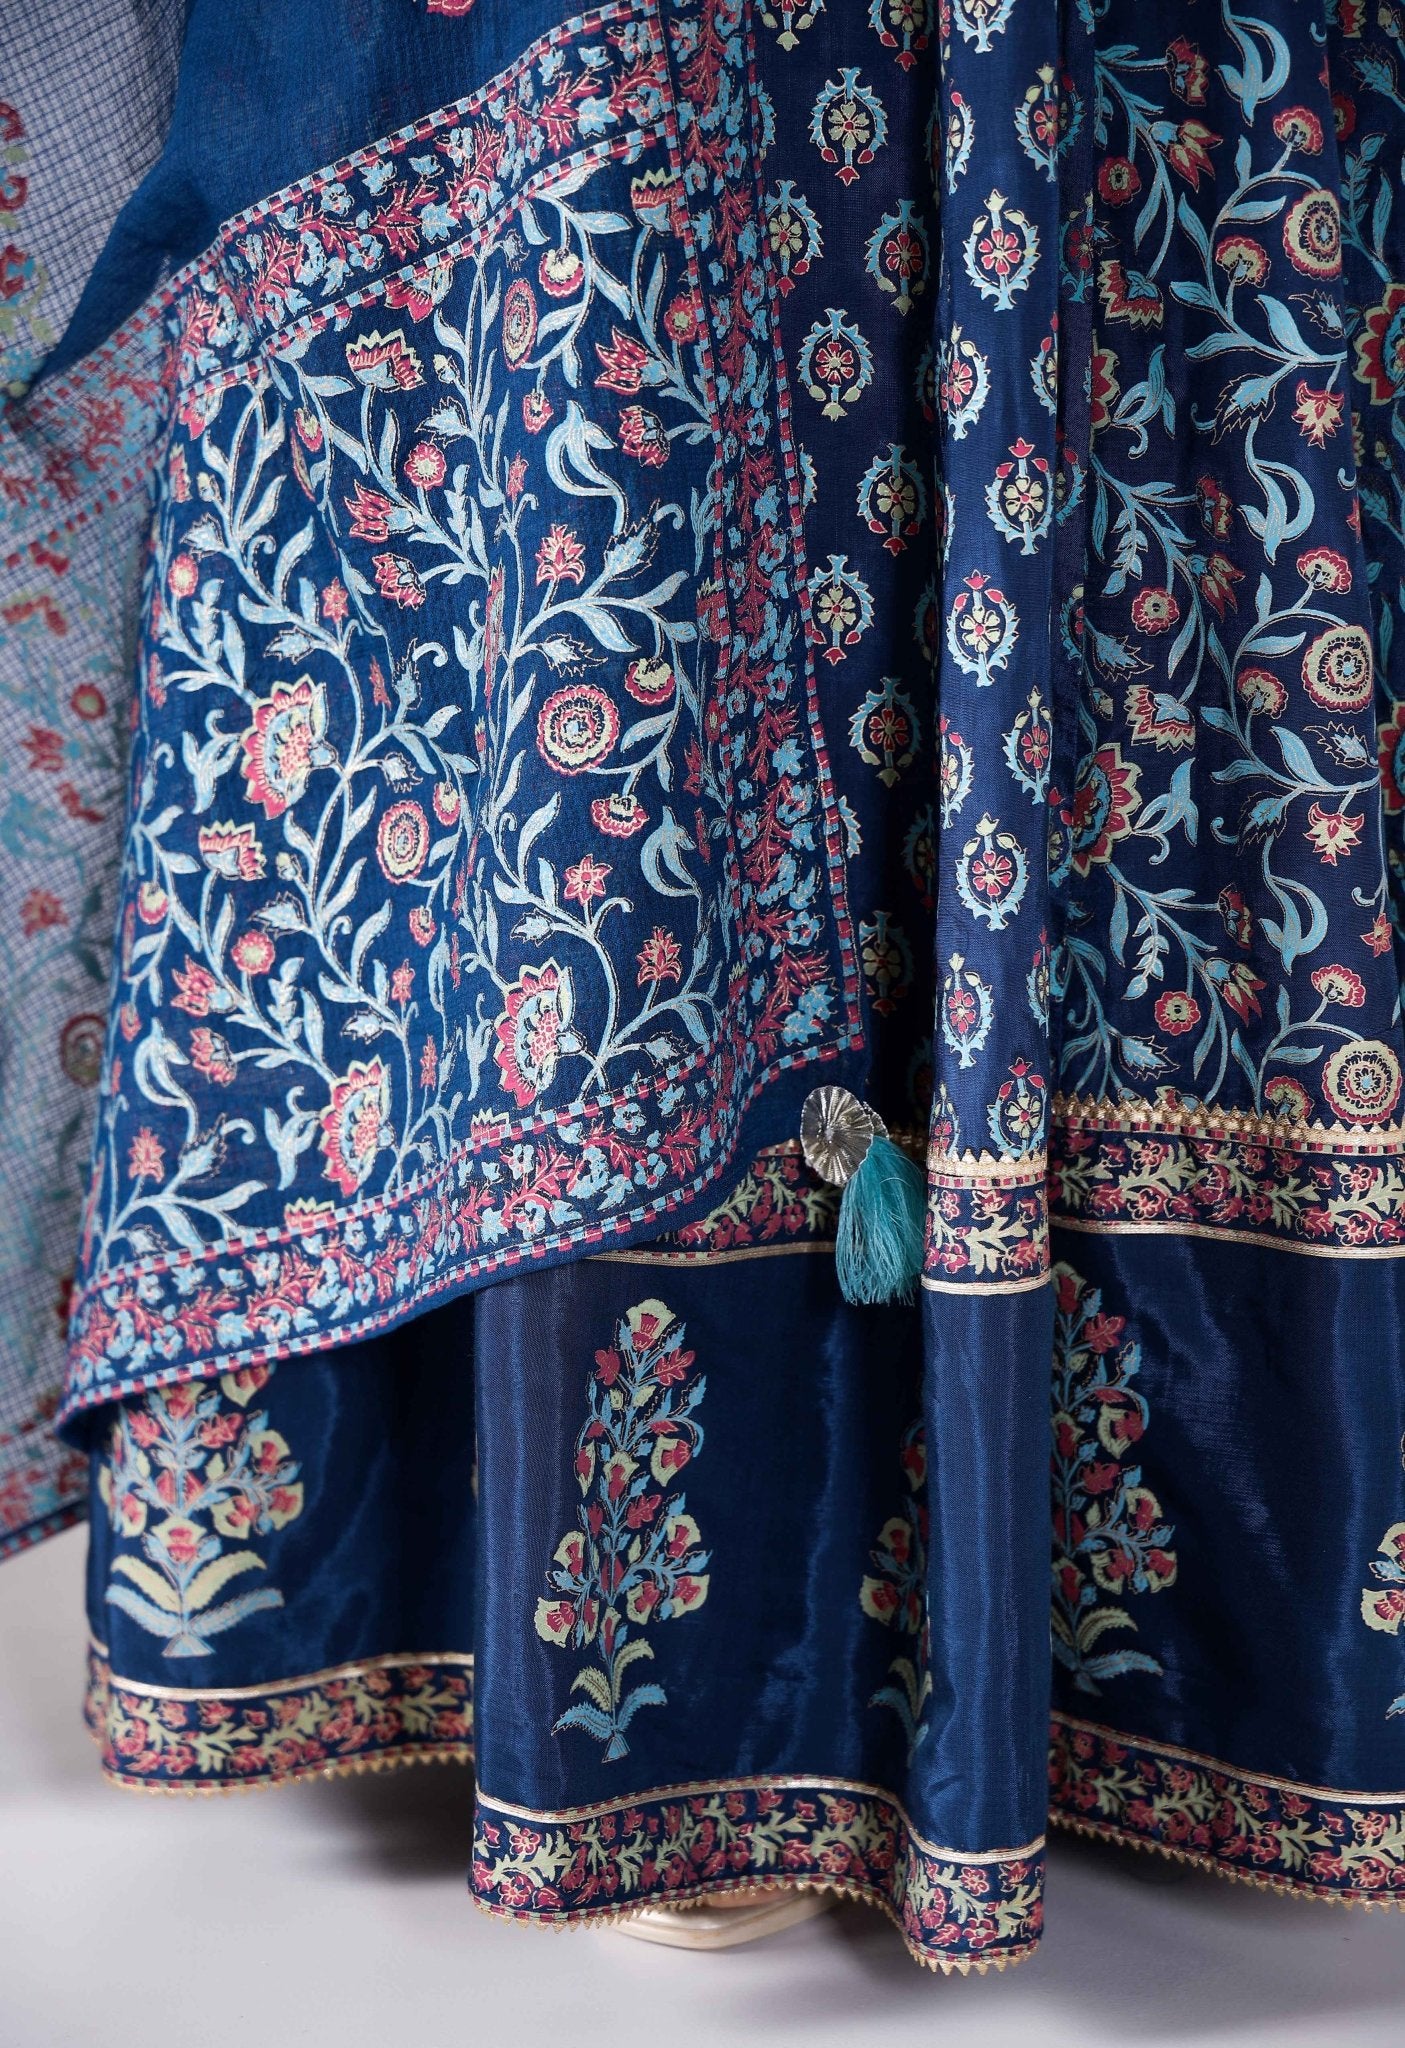 Floral Buti Printed long Anarkali dress With Pants and Printed Doriya Dupatta (3pc Set) - Tara-C-Tara